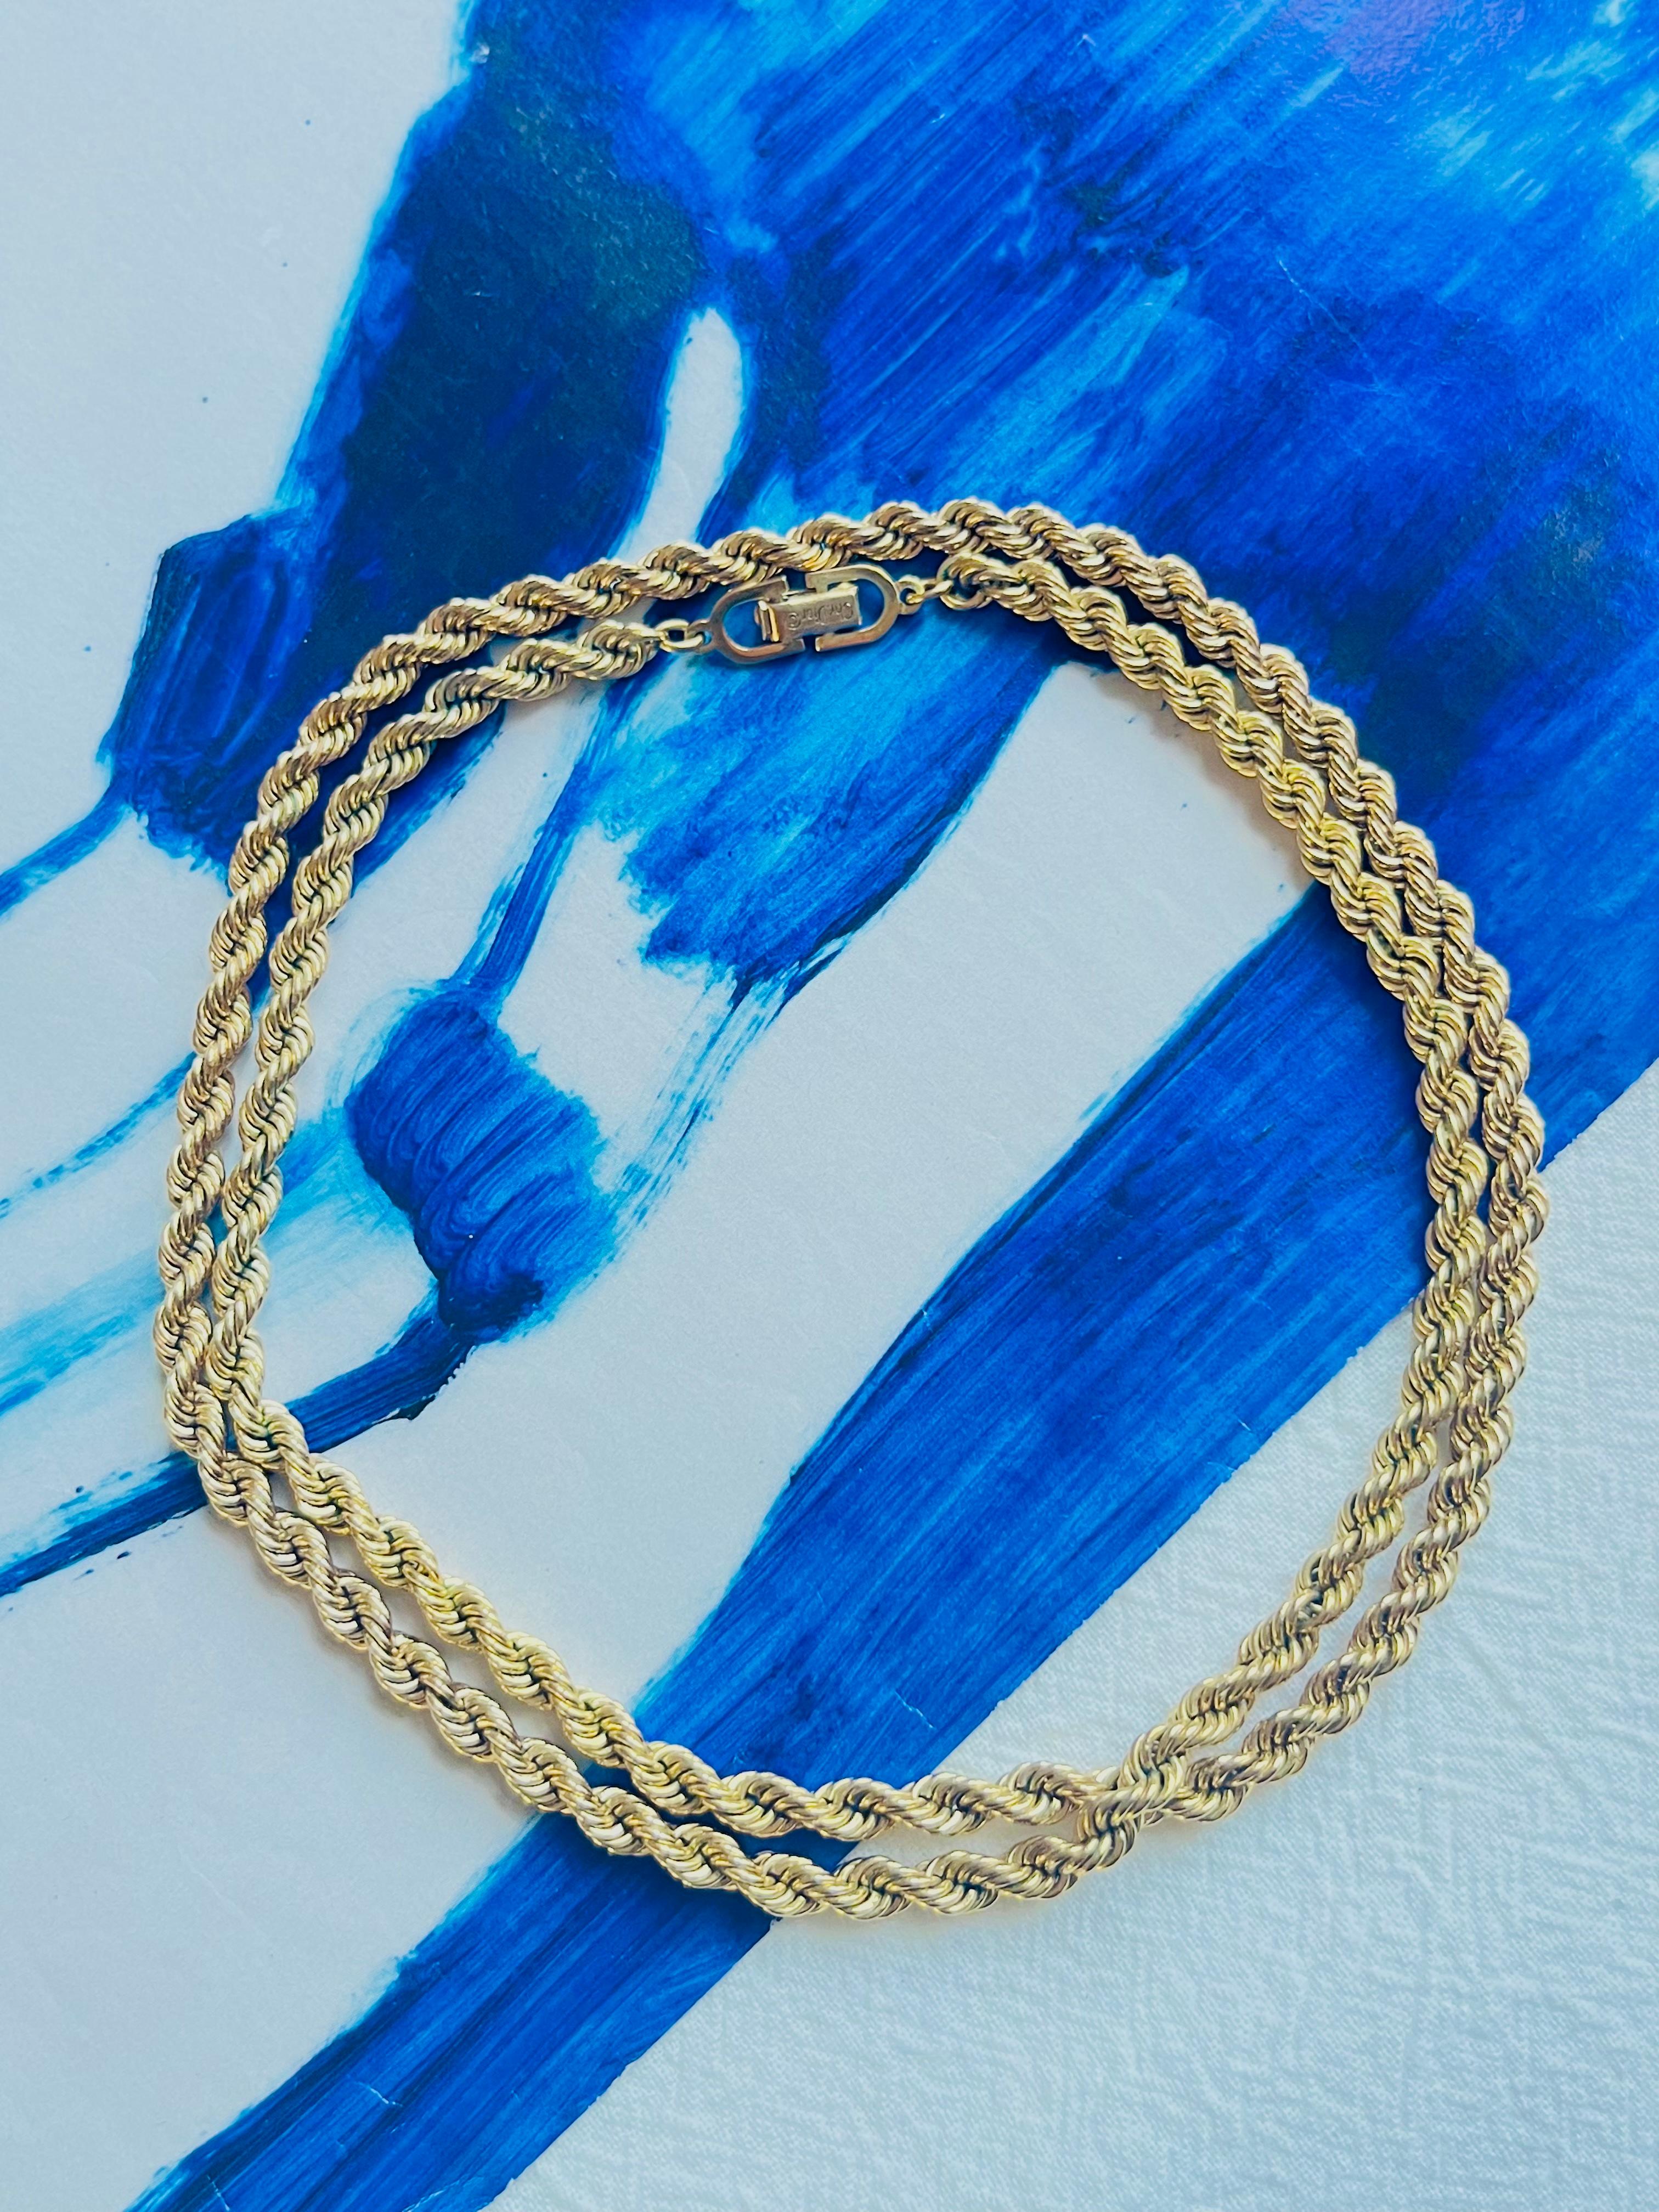 Christian Dior Vintage 1980s Twist Chain Rope Versatile Long Necklace Bracelet, Gold Tone

Very good condition. 100% genuine.

A unique piece. Signed 